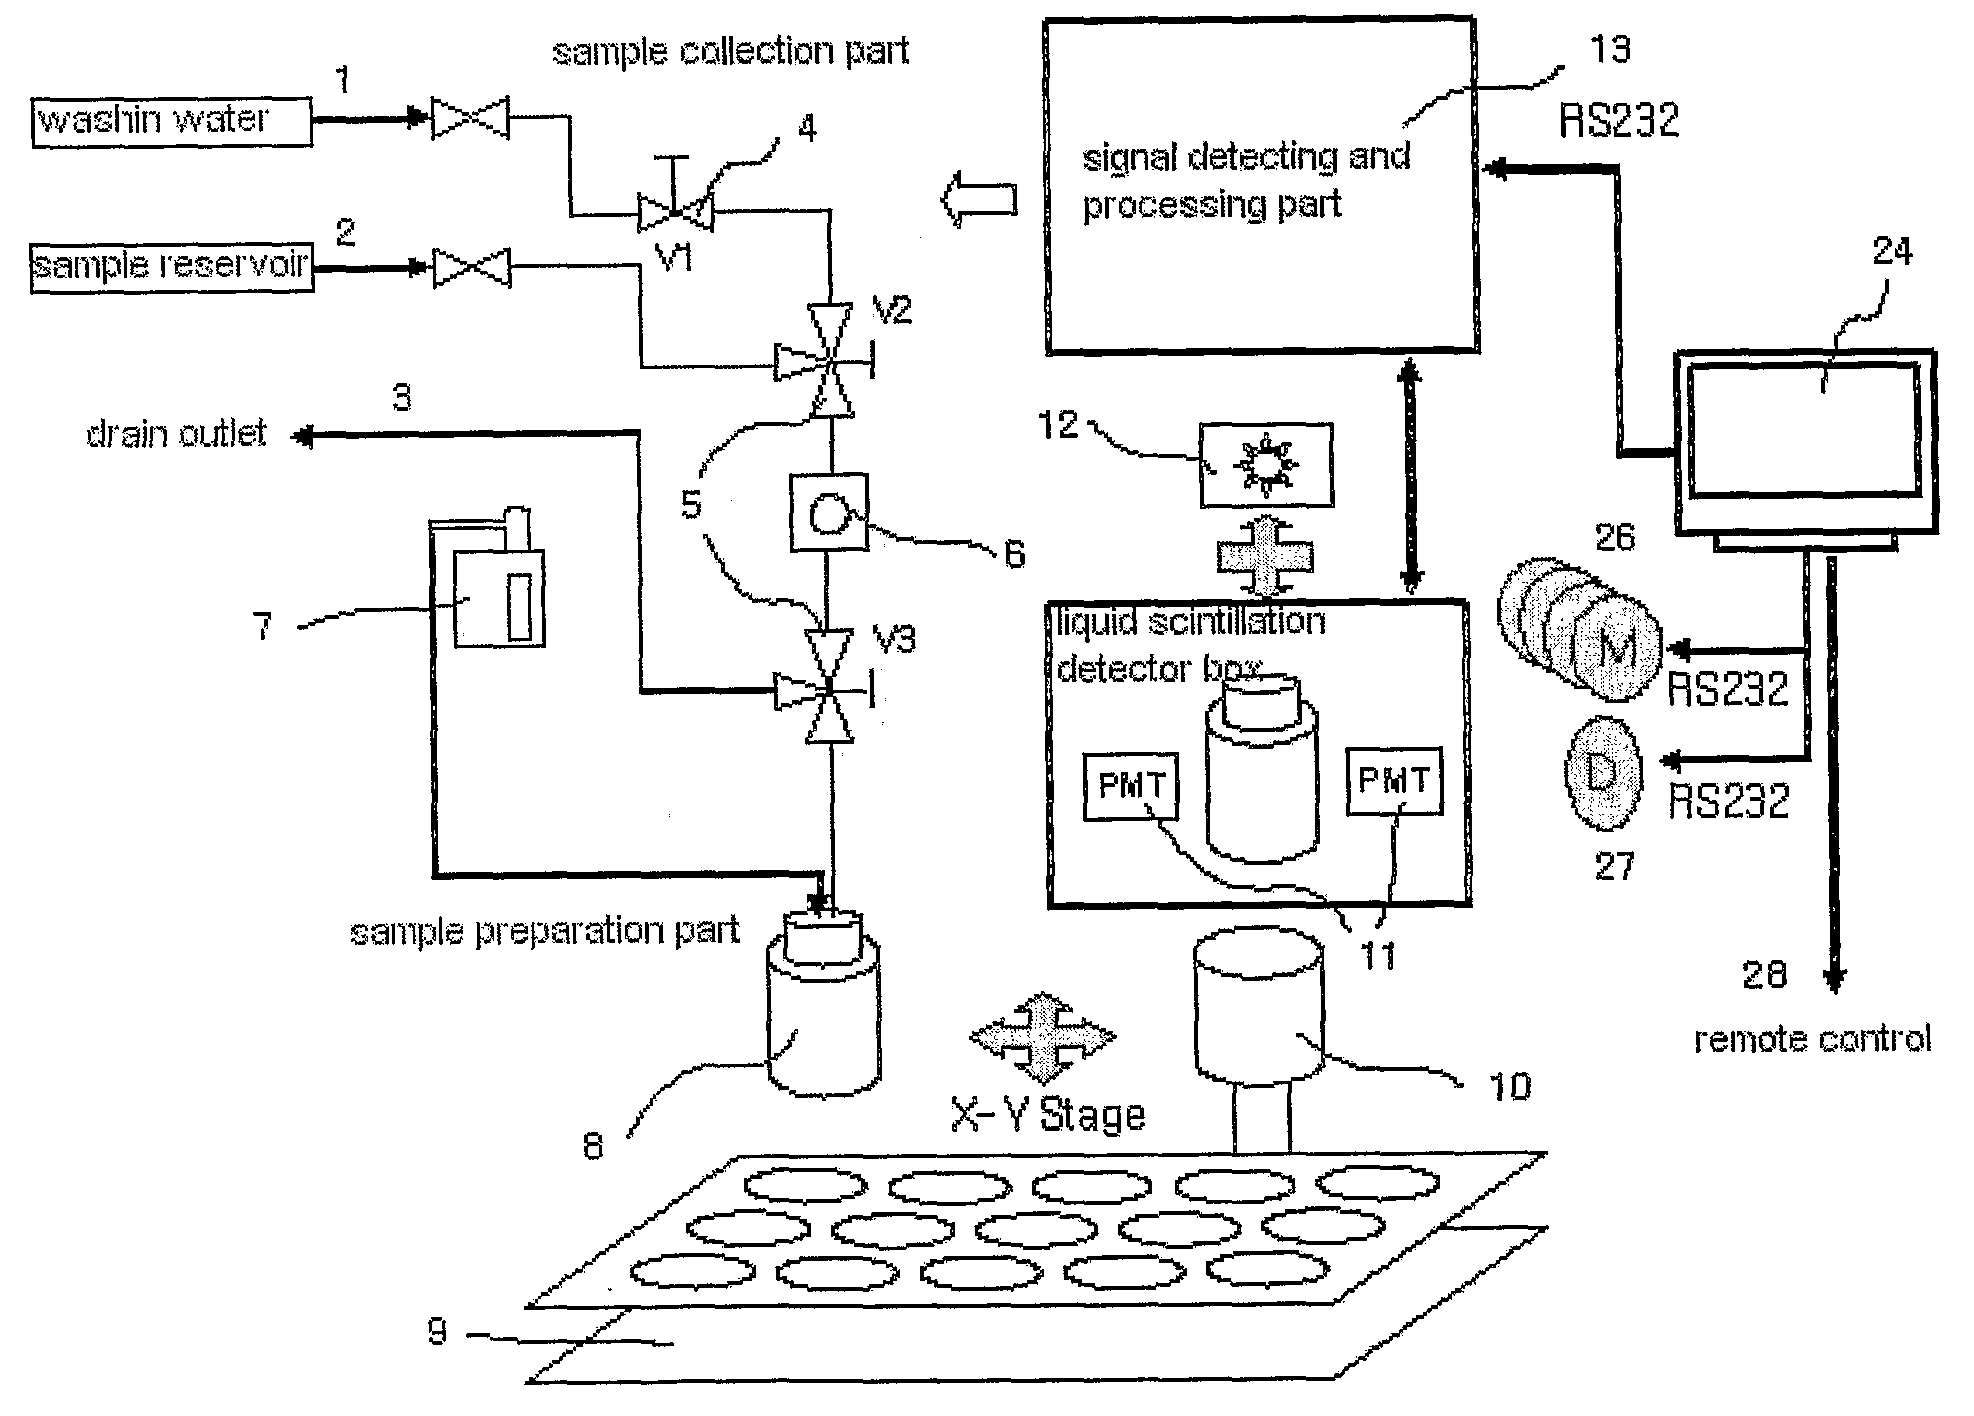 Automatic radioactivity analyzer of mixed liquid beta emitter